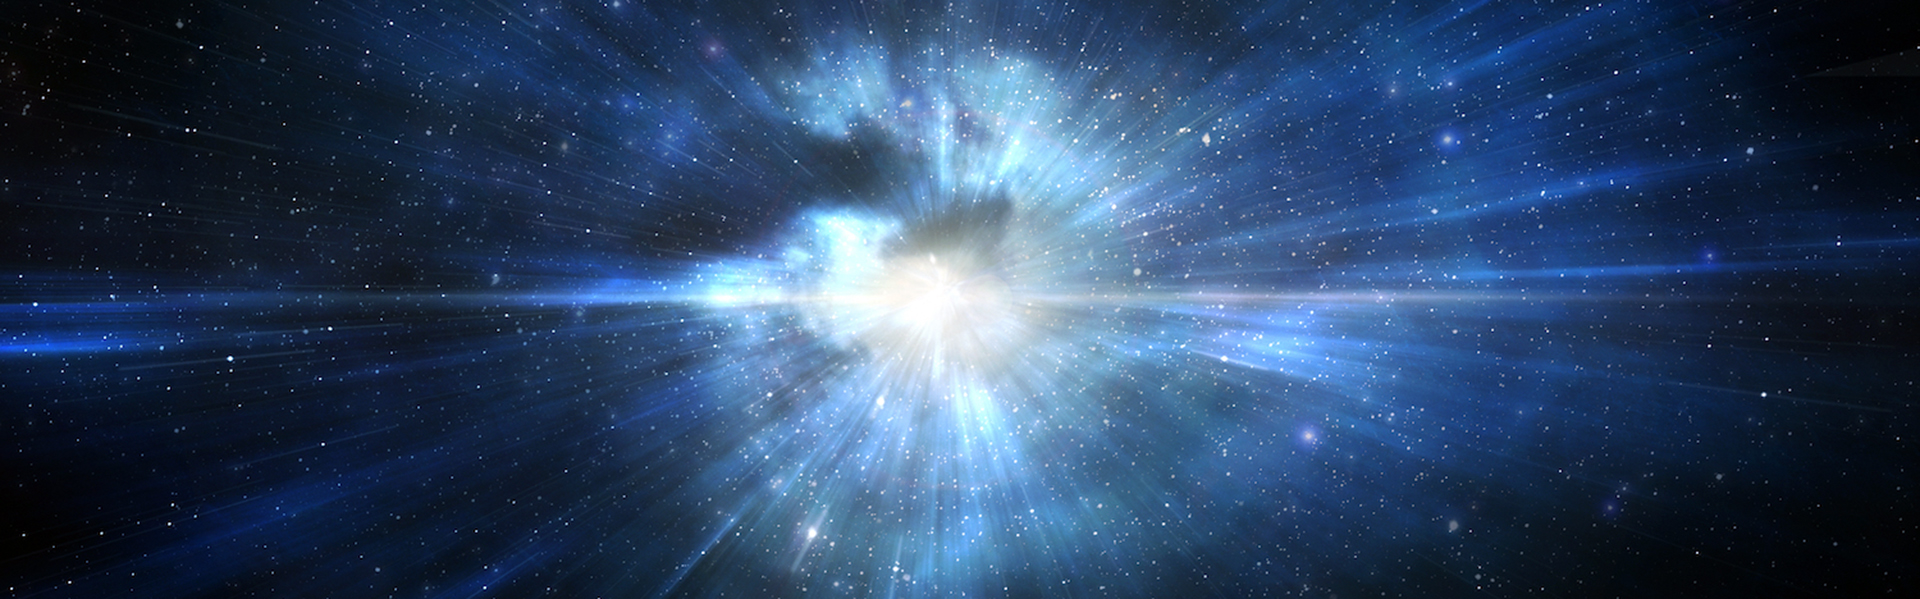 Seis pasos hacia el Big Bang